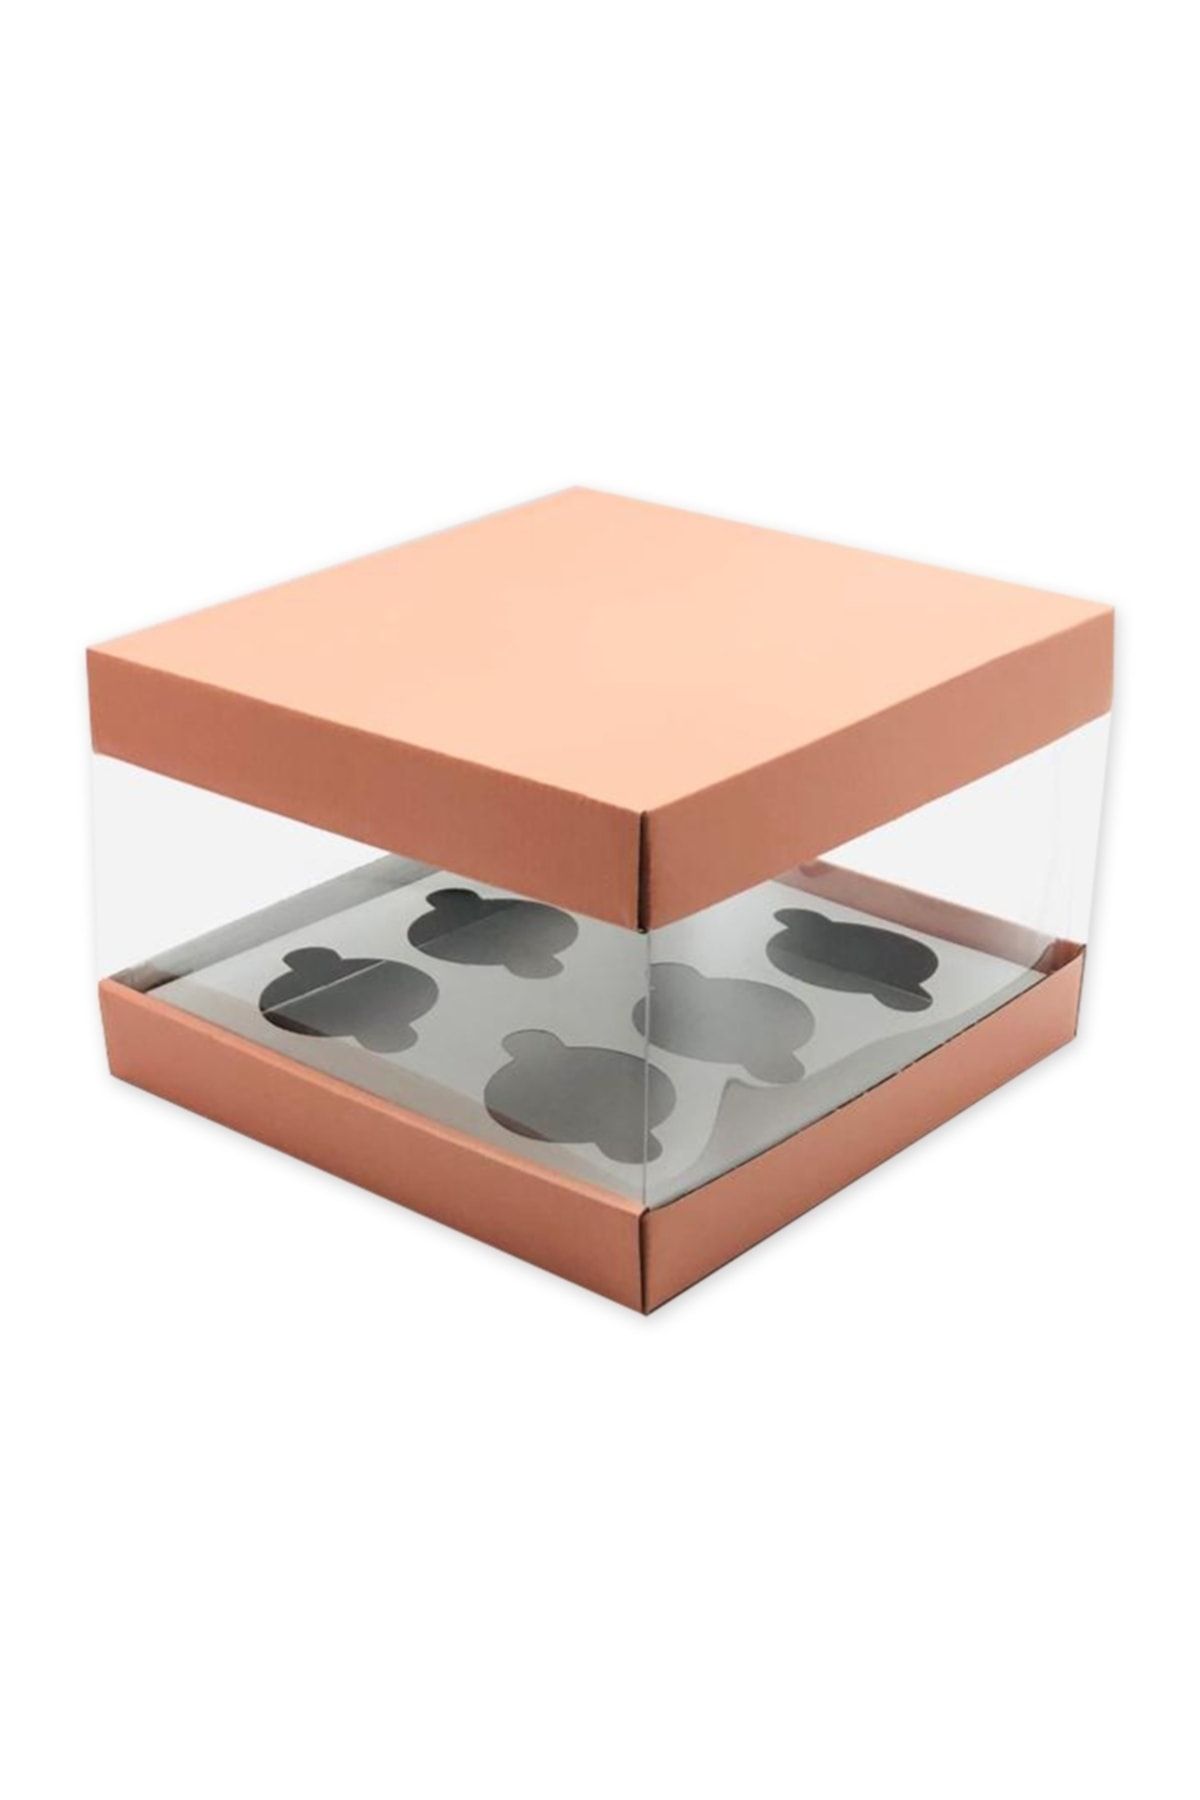 Feza Kutu Asetatlı 6'lı Cupcake Kutusu (10 Adet)